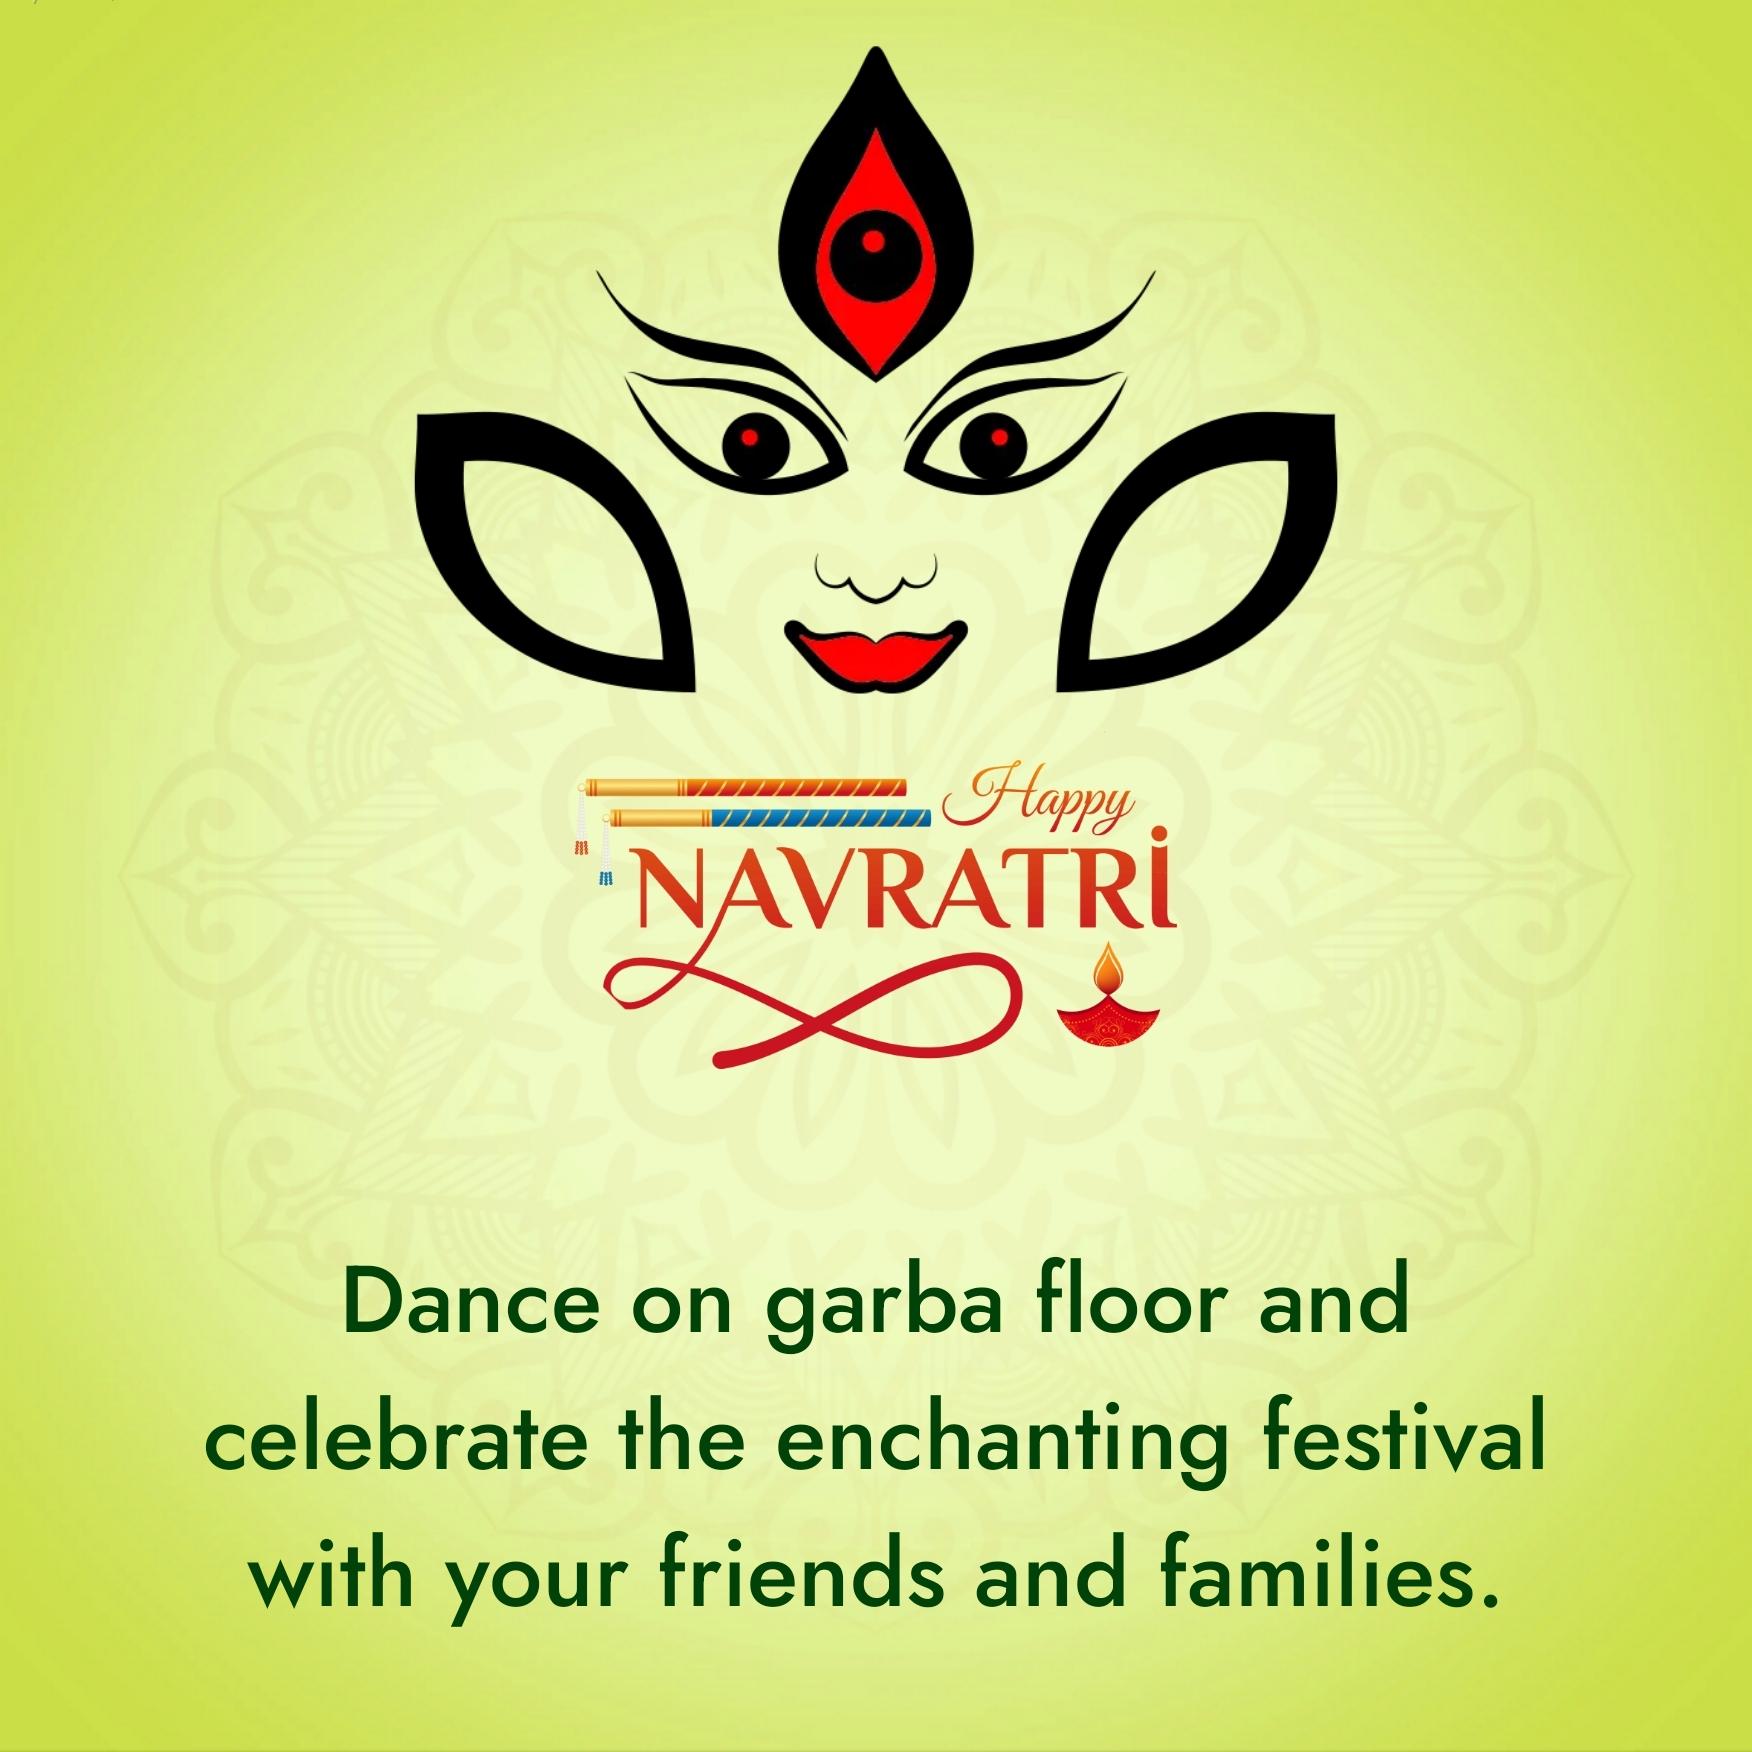 Dance on garba floor and celebrate the enchanting festival